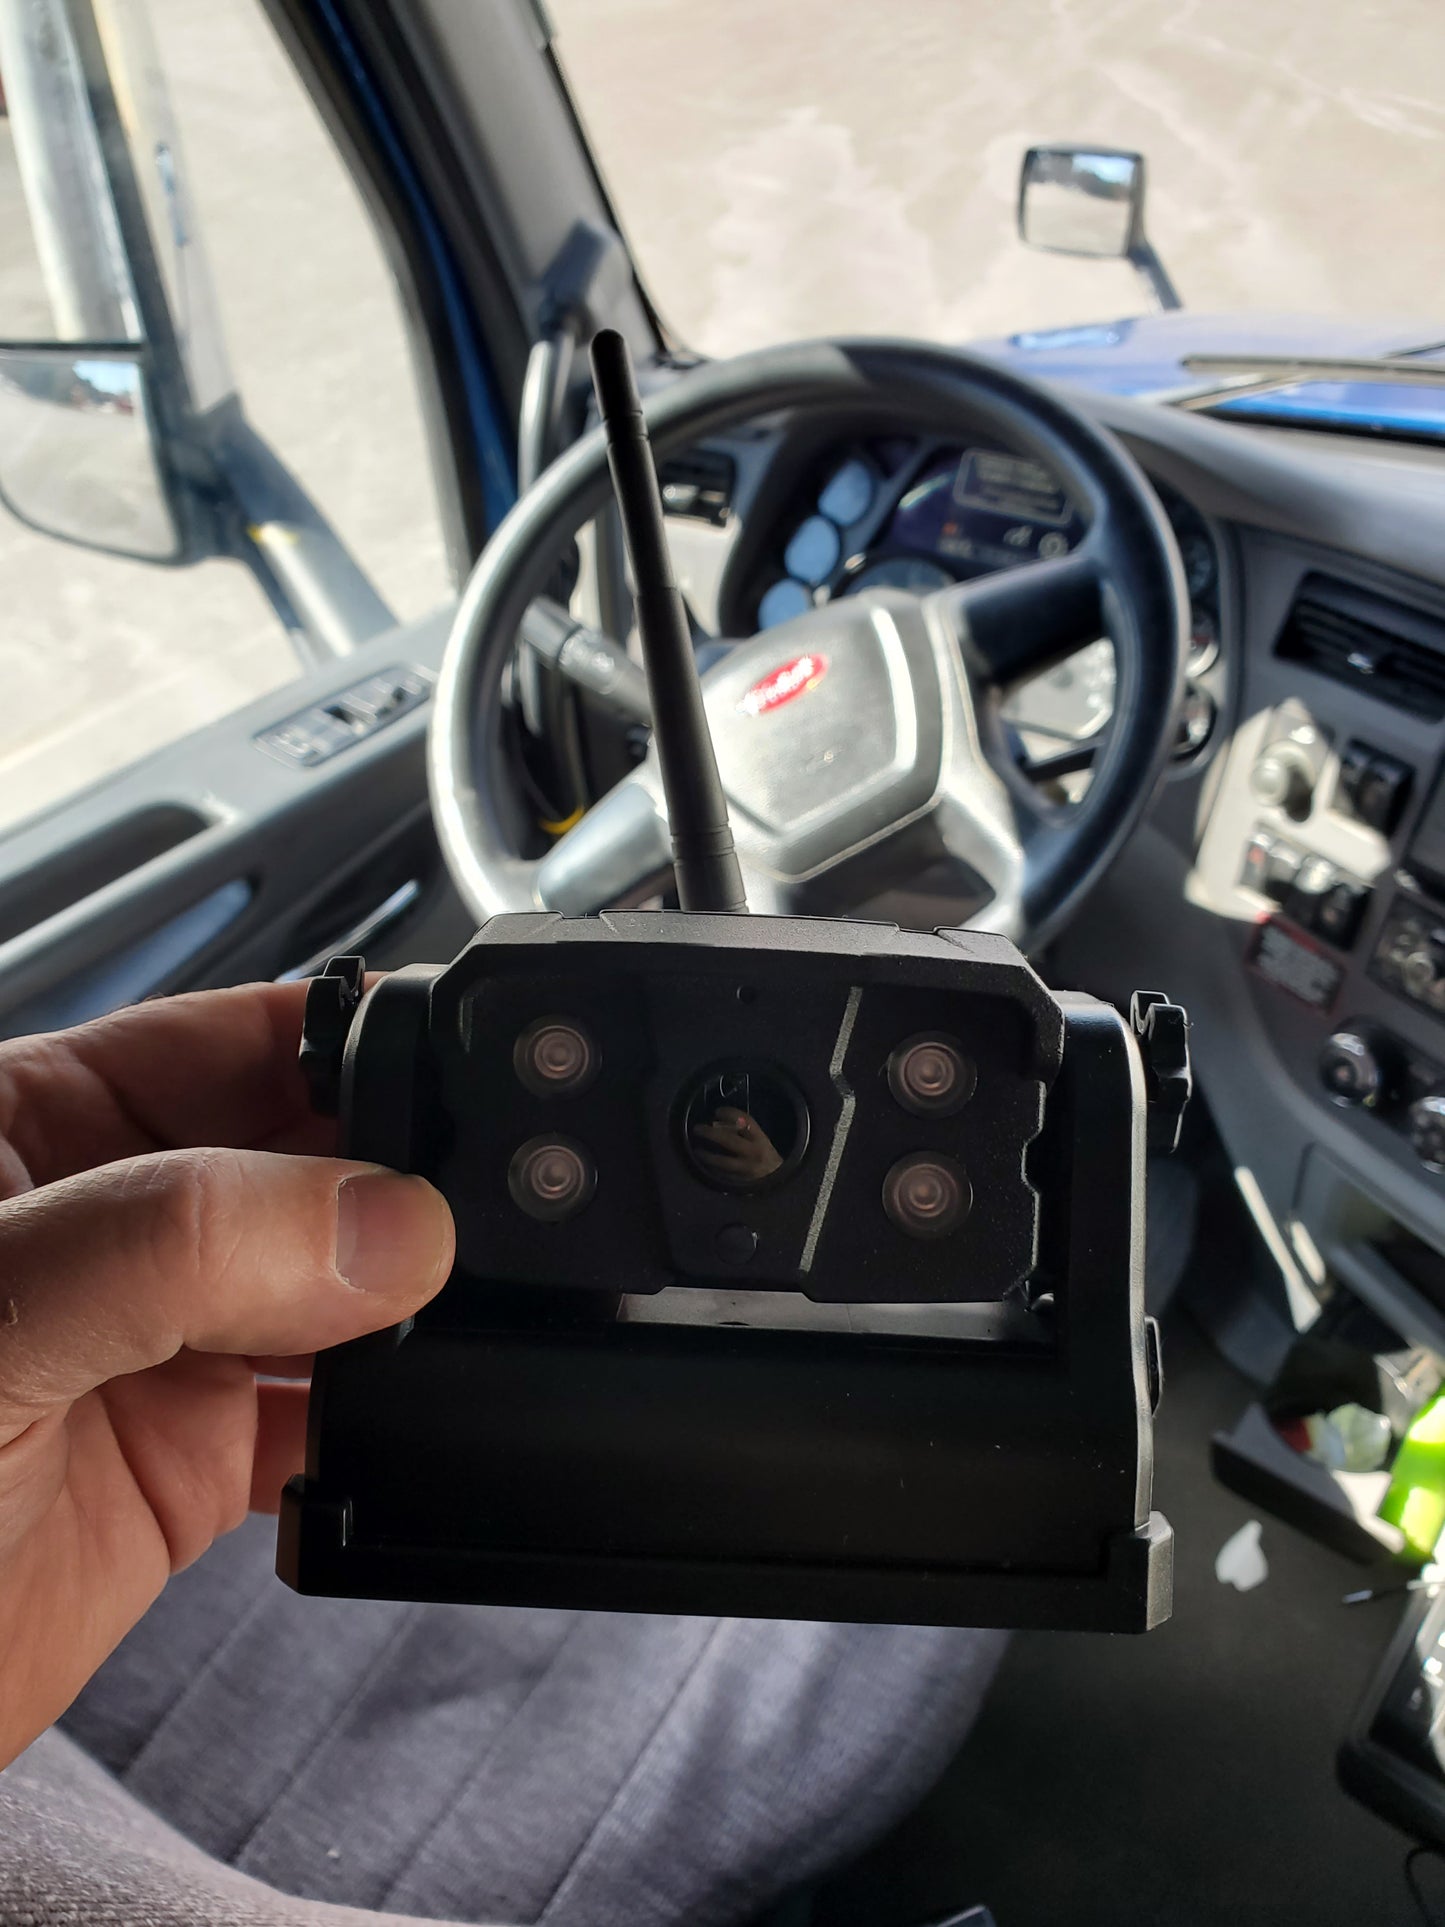 TruVision Complete Wireless Semi-Truck Monitor and 2 Camera System